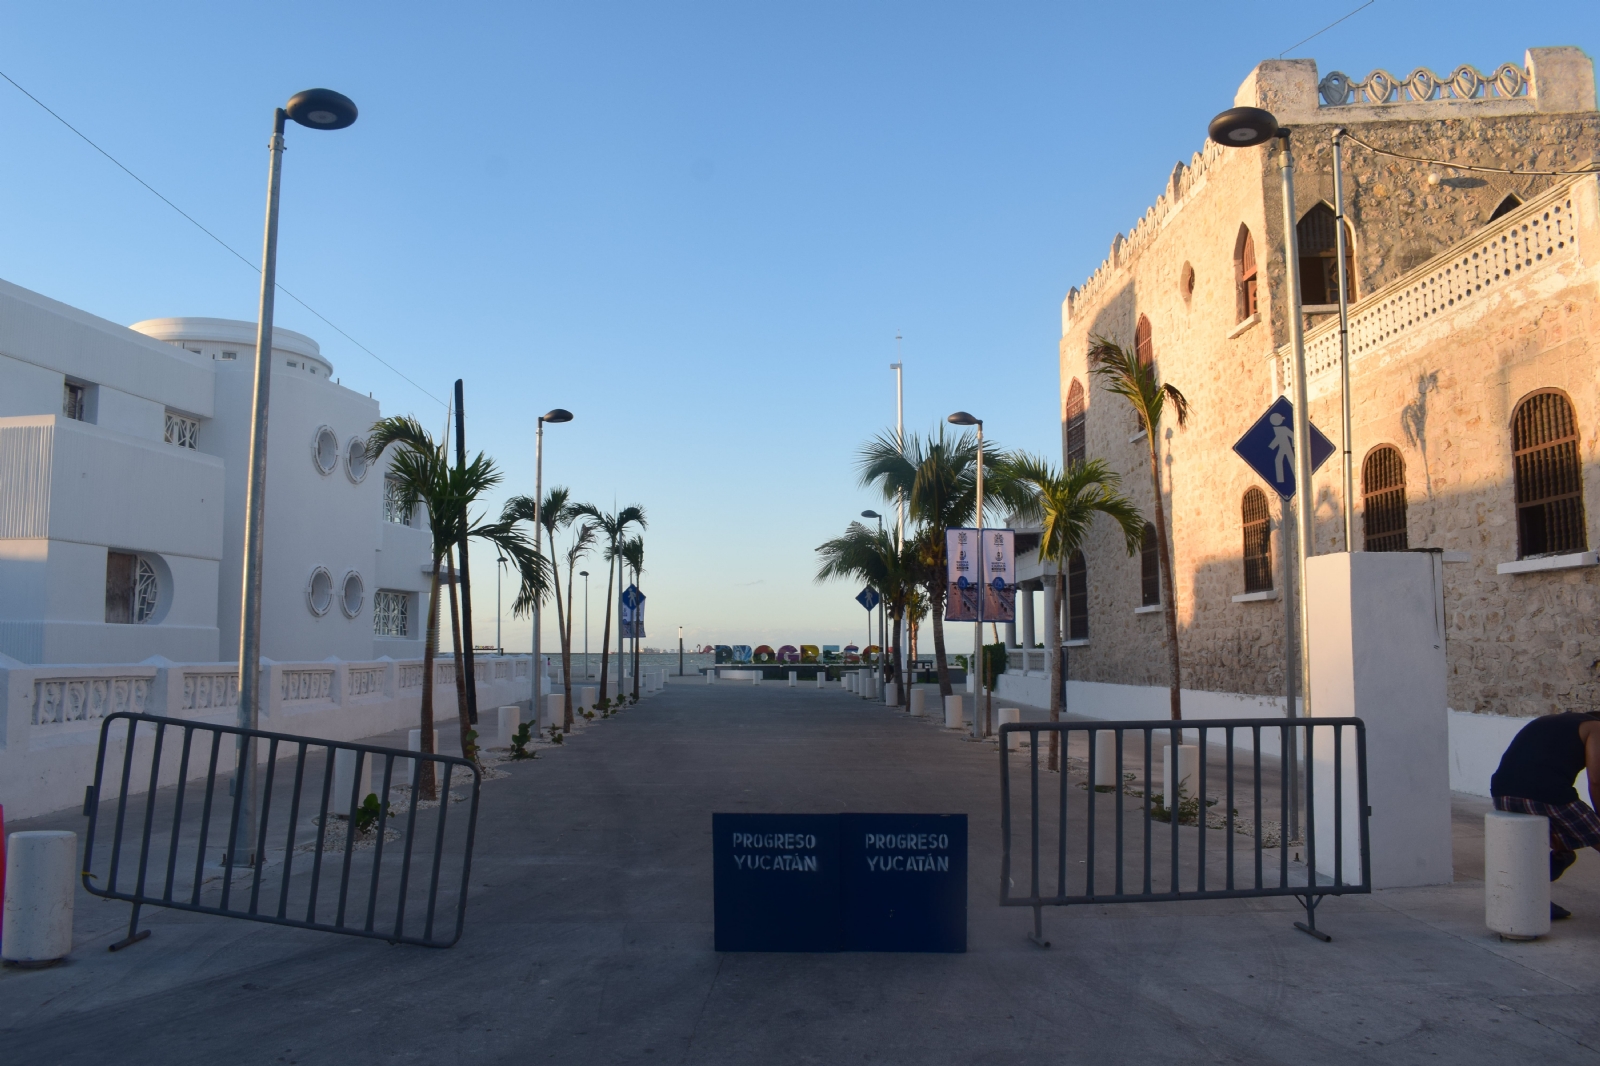 Malecón de Progreso será peatonal, afirma Julián Zacarías